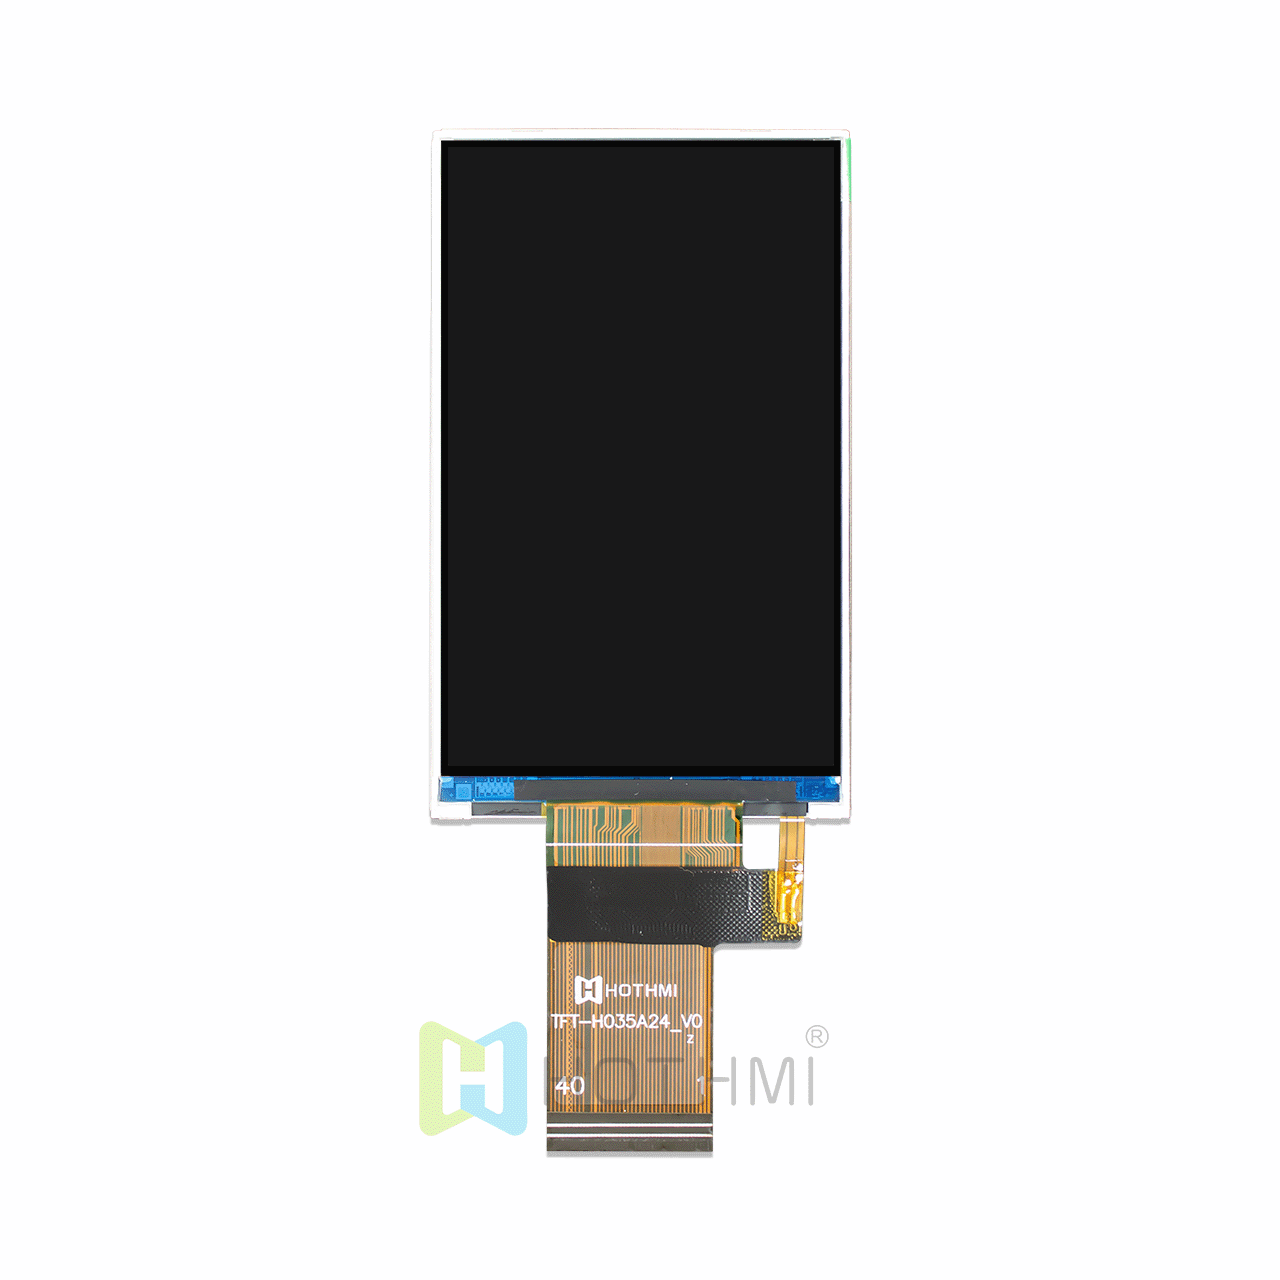 3.5-inch IPS TFT LCD module display/480x800 dot matrix high resolution/ST7701S/color screen module/RGB+SPI/readable under sunlight